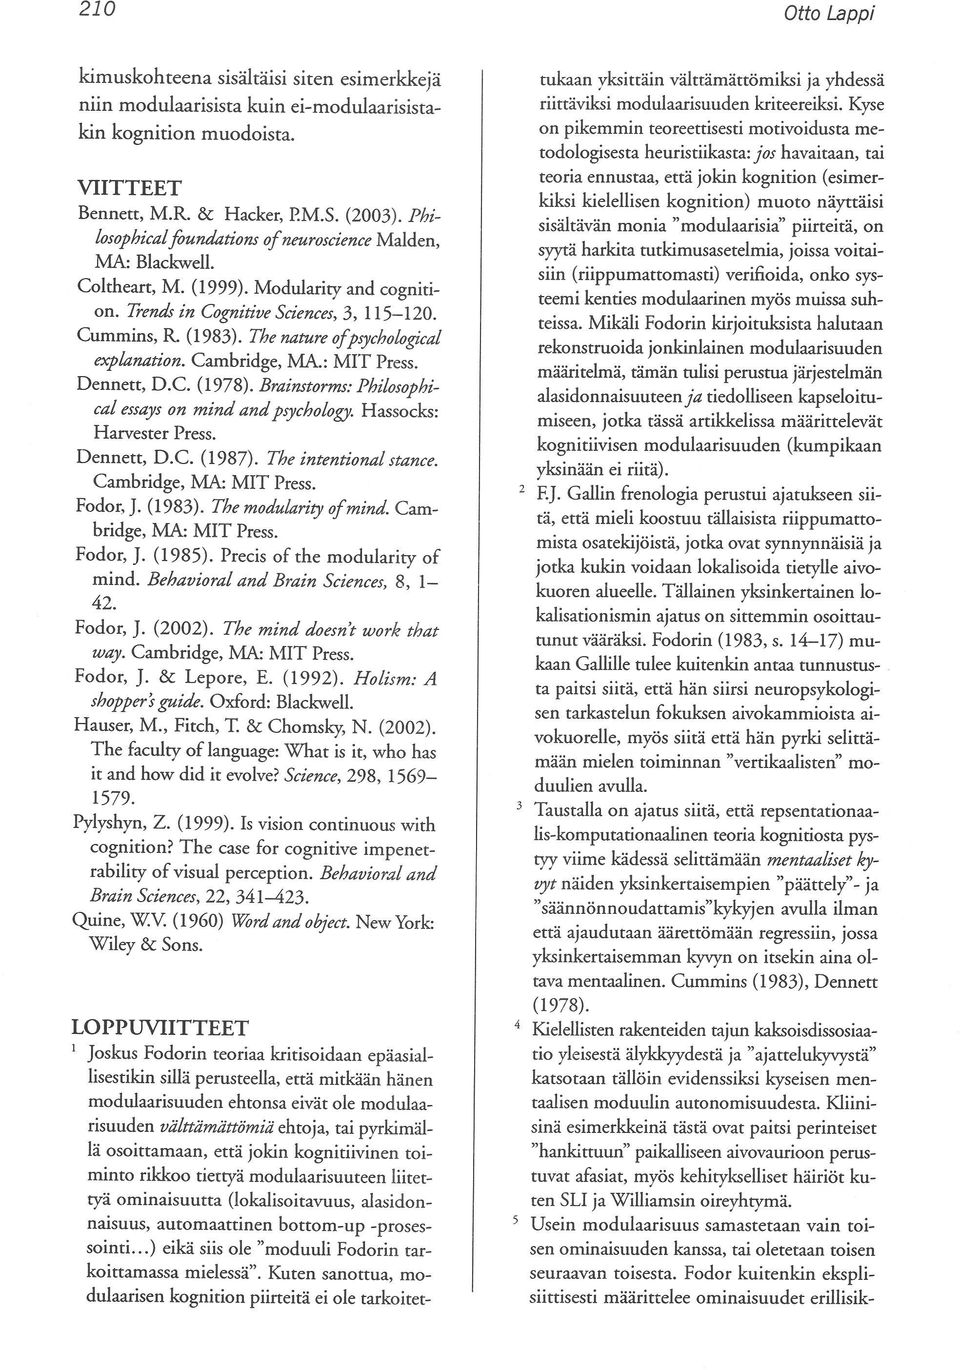 The nature olpsychological explanation. Cambridge, MA.: M1T Press. Dennett, D.C. (1978). Braimtorms: Philosophical essays on mindandpsychology. Hassocks: Harvester Press. Dennett, D.C. (1987).